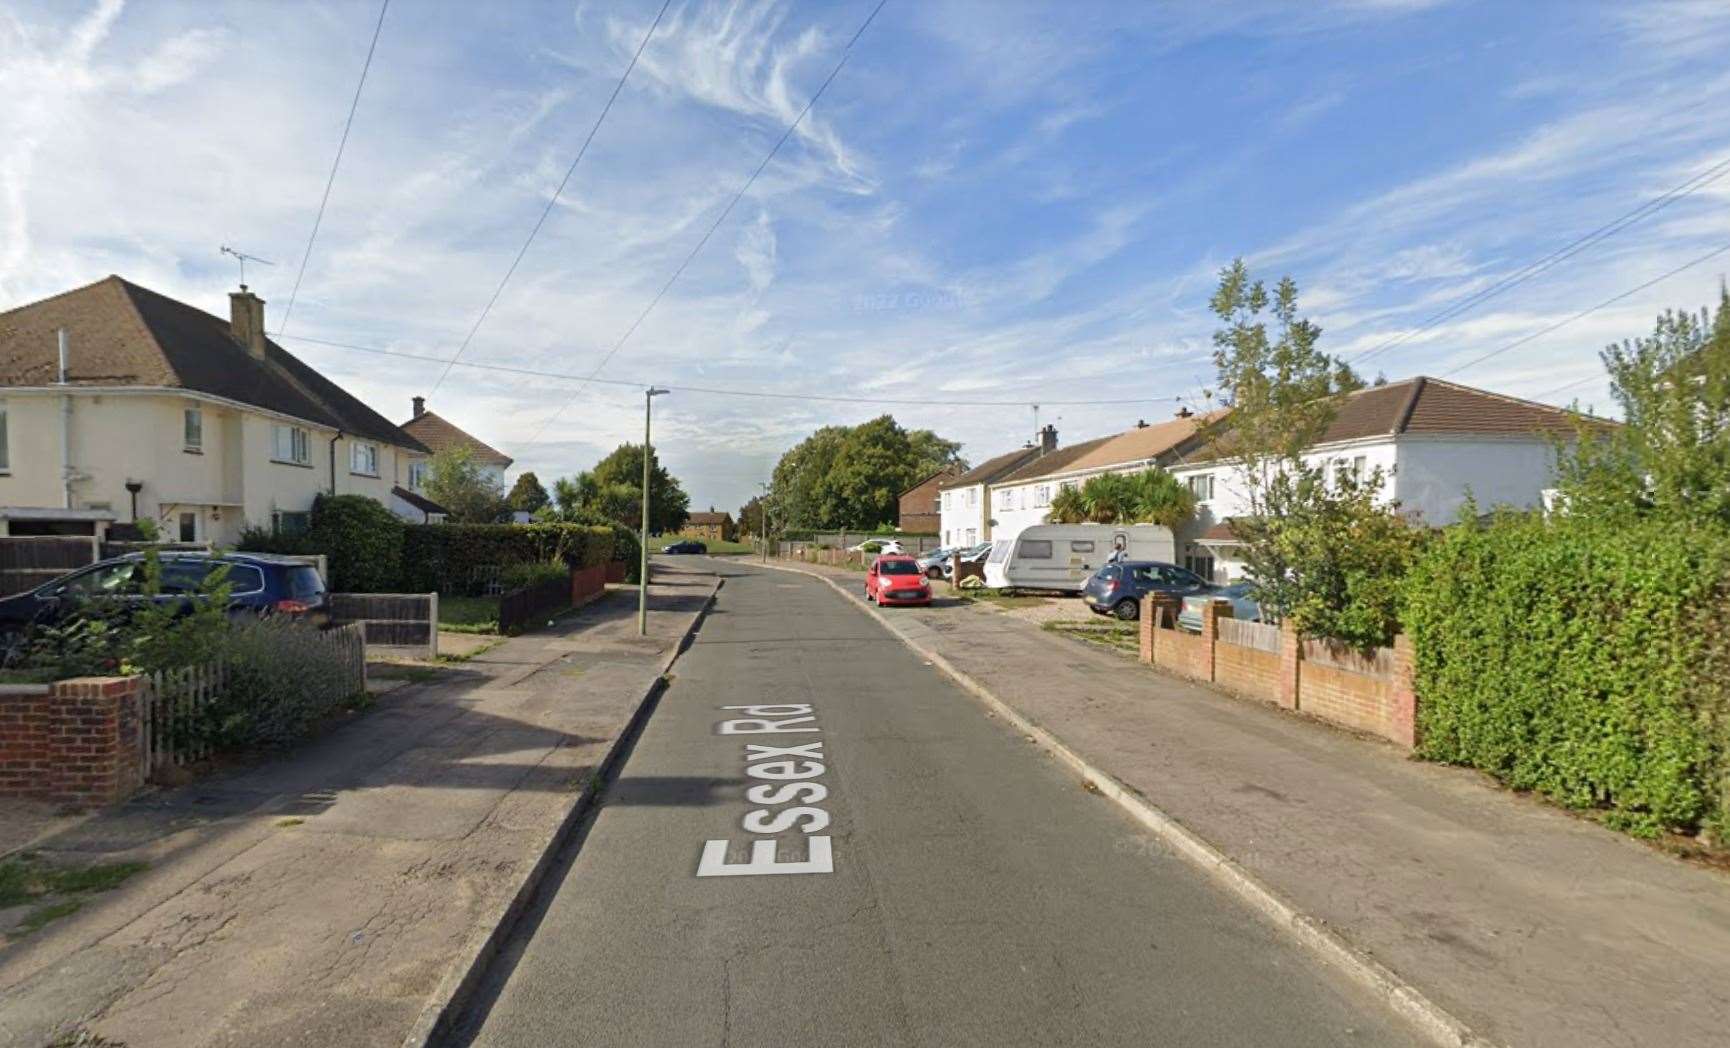 Essex Road in Maidstone. Picture: Google